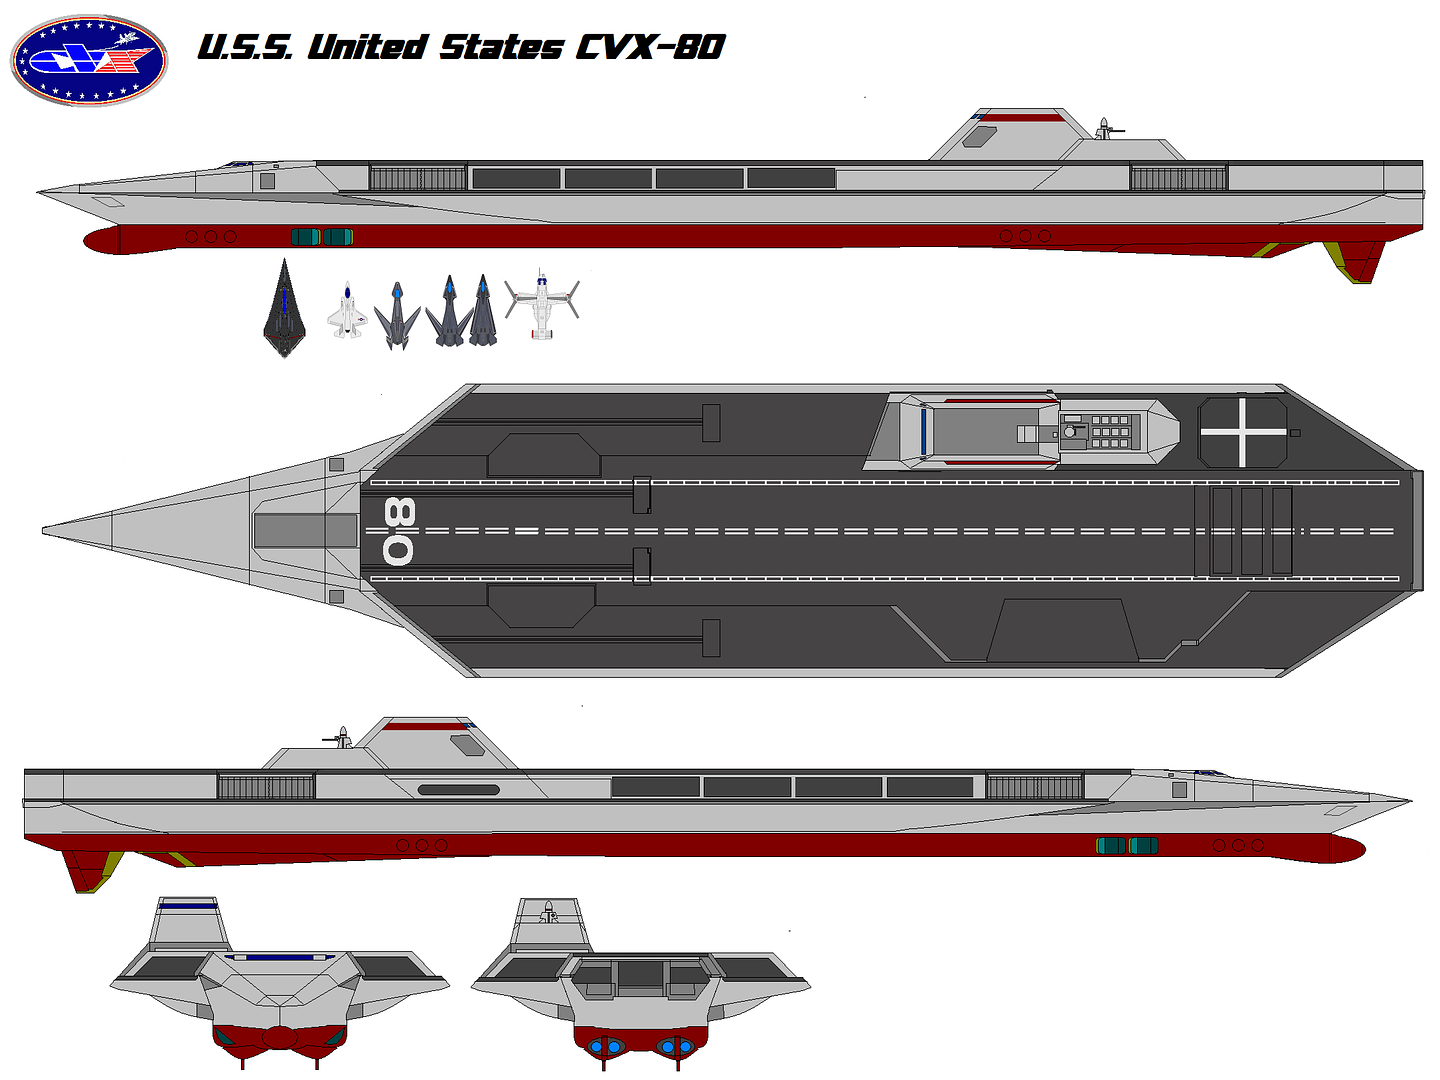 USSUnitedStatesCVX-80.png